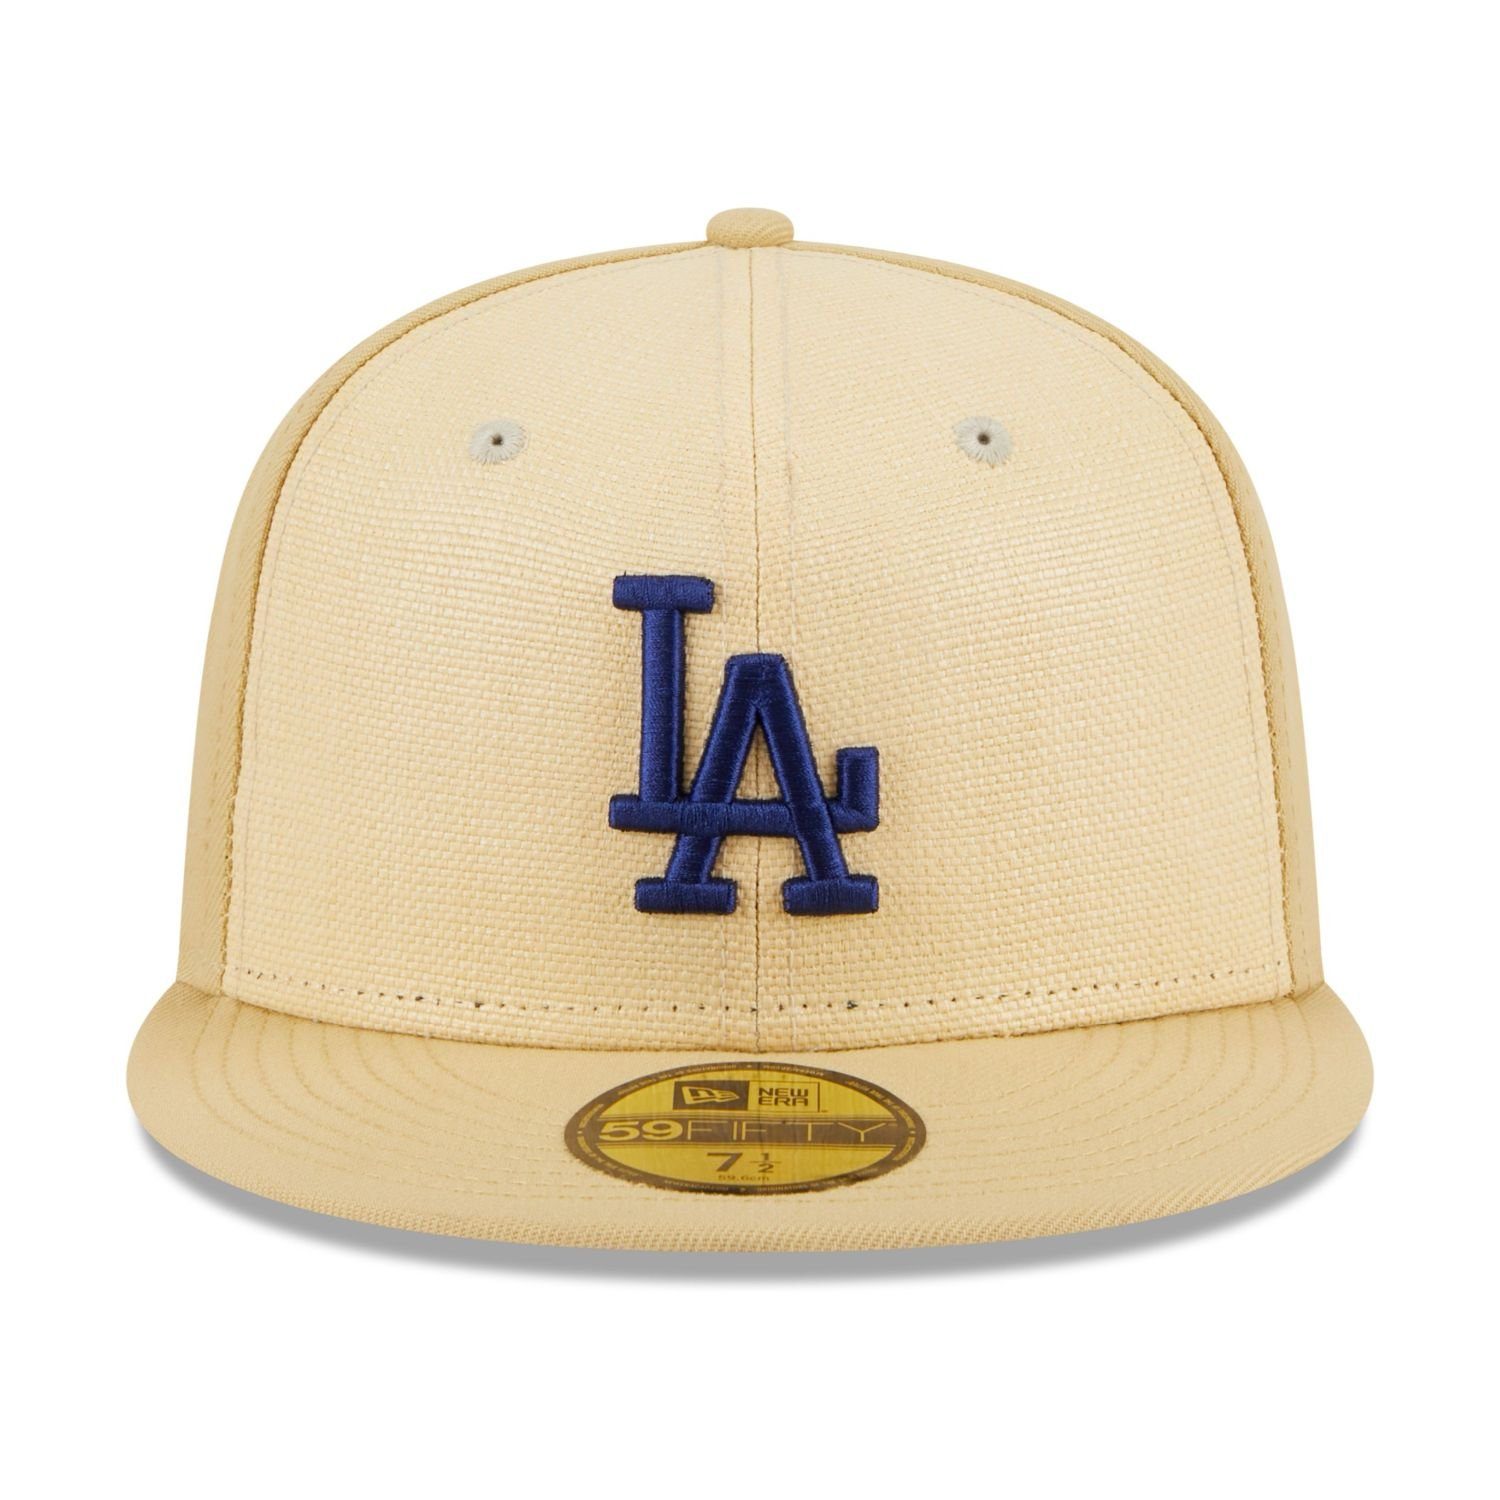 New Era Cap Dodgers Angeles 59Fifty Los RAFFIA Fitted